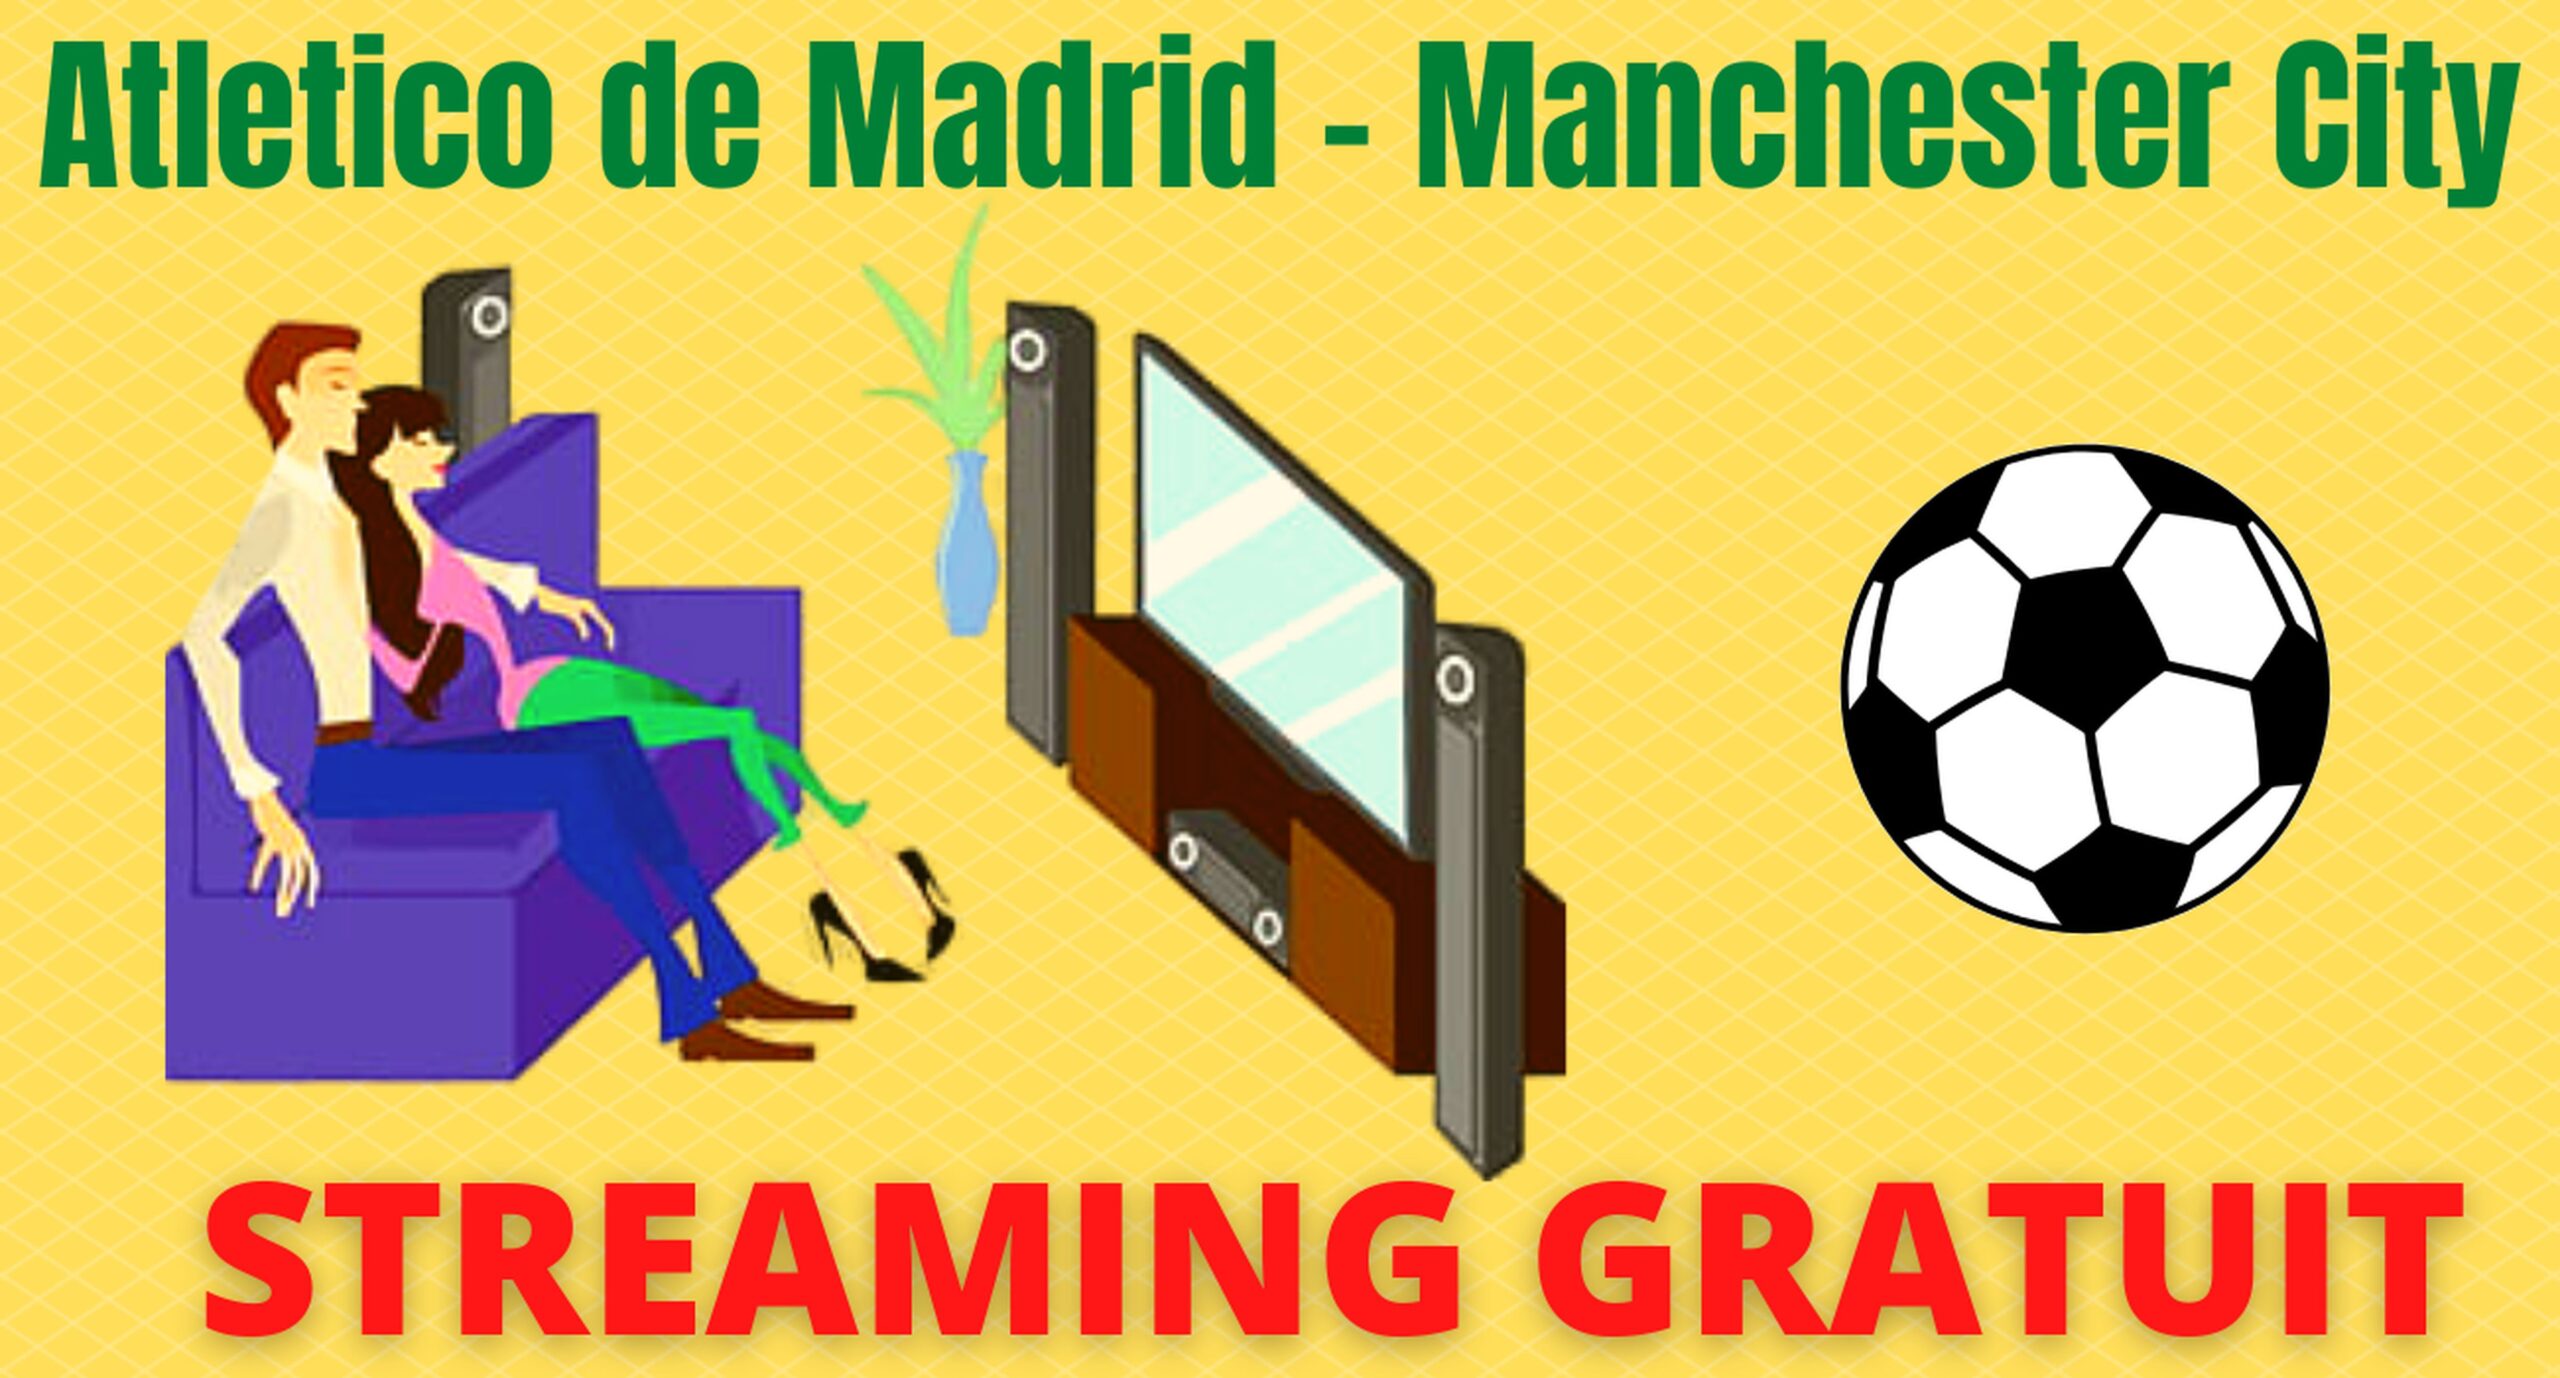 Atletico Madrid Manchester City en Streaming gratuit